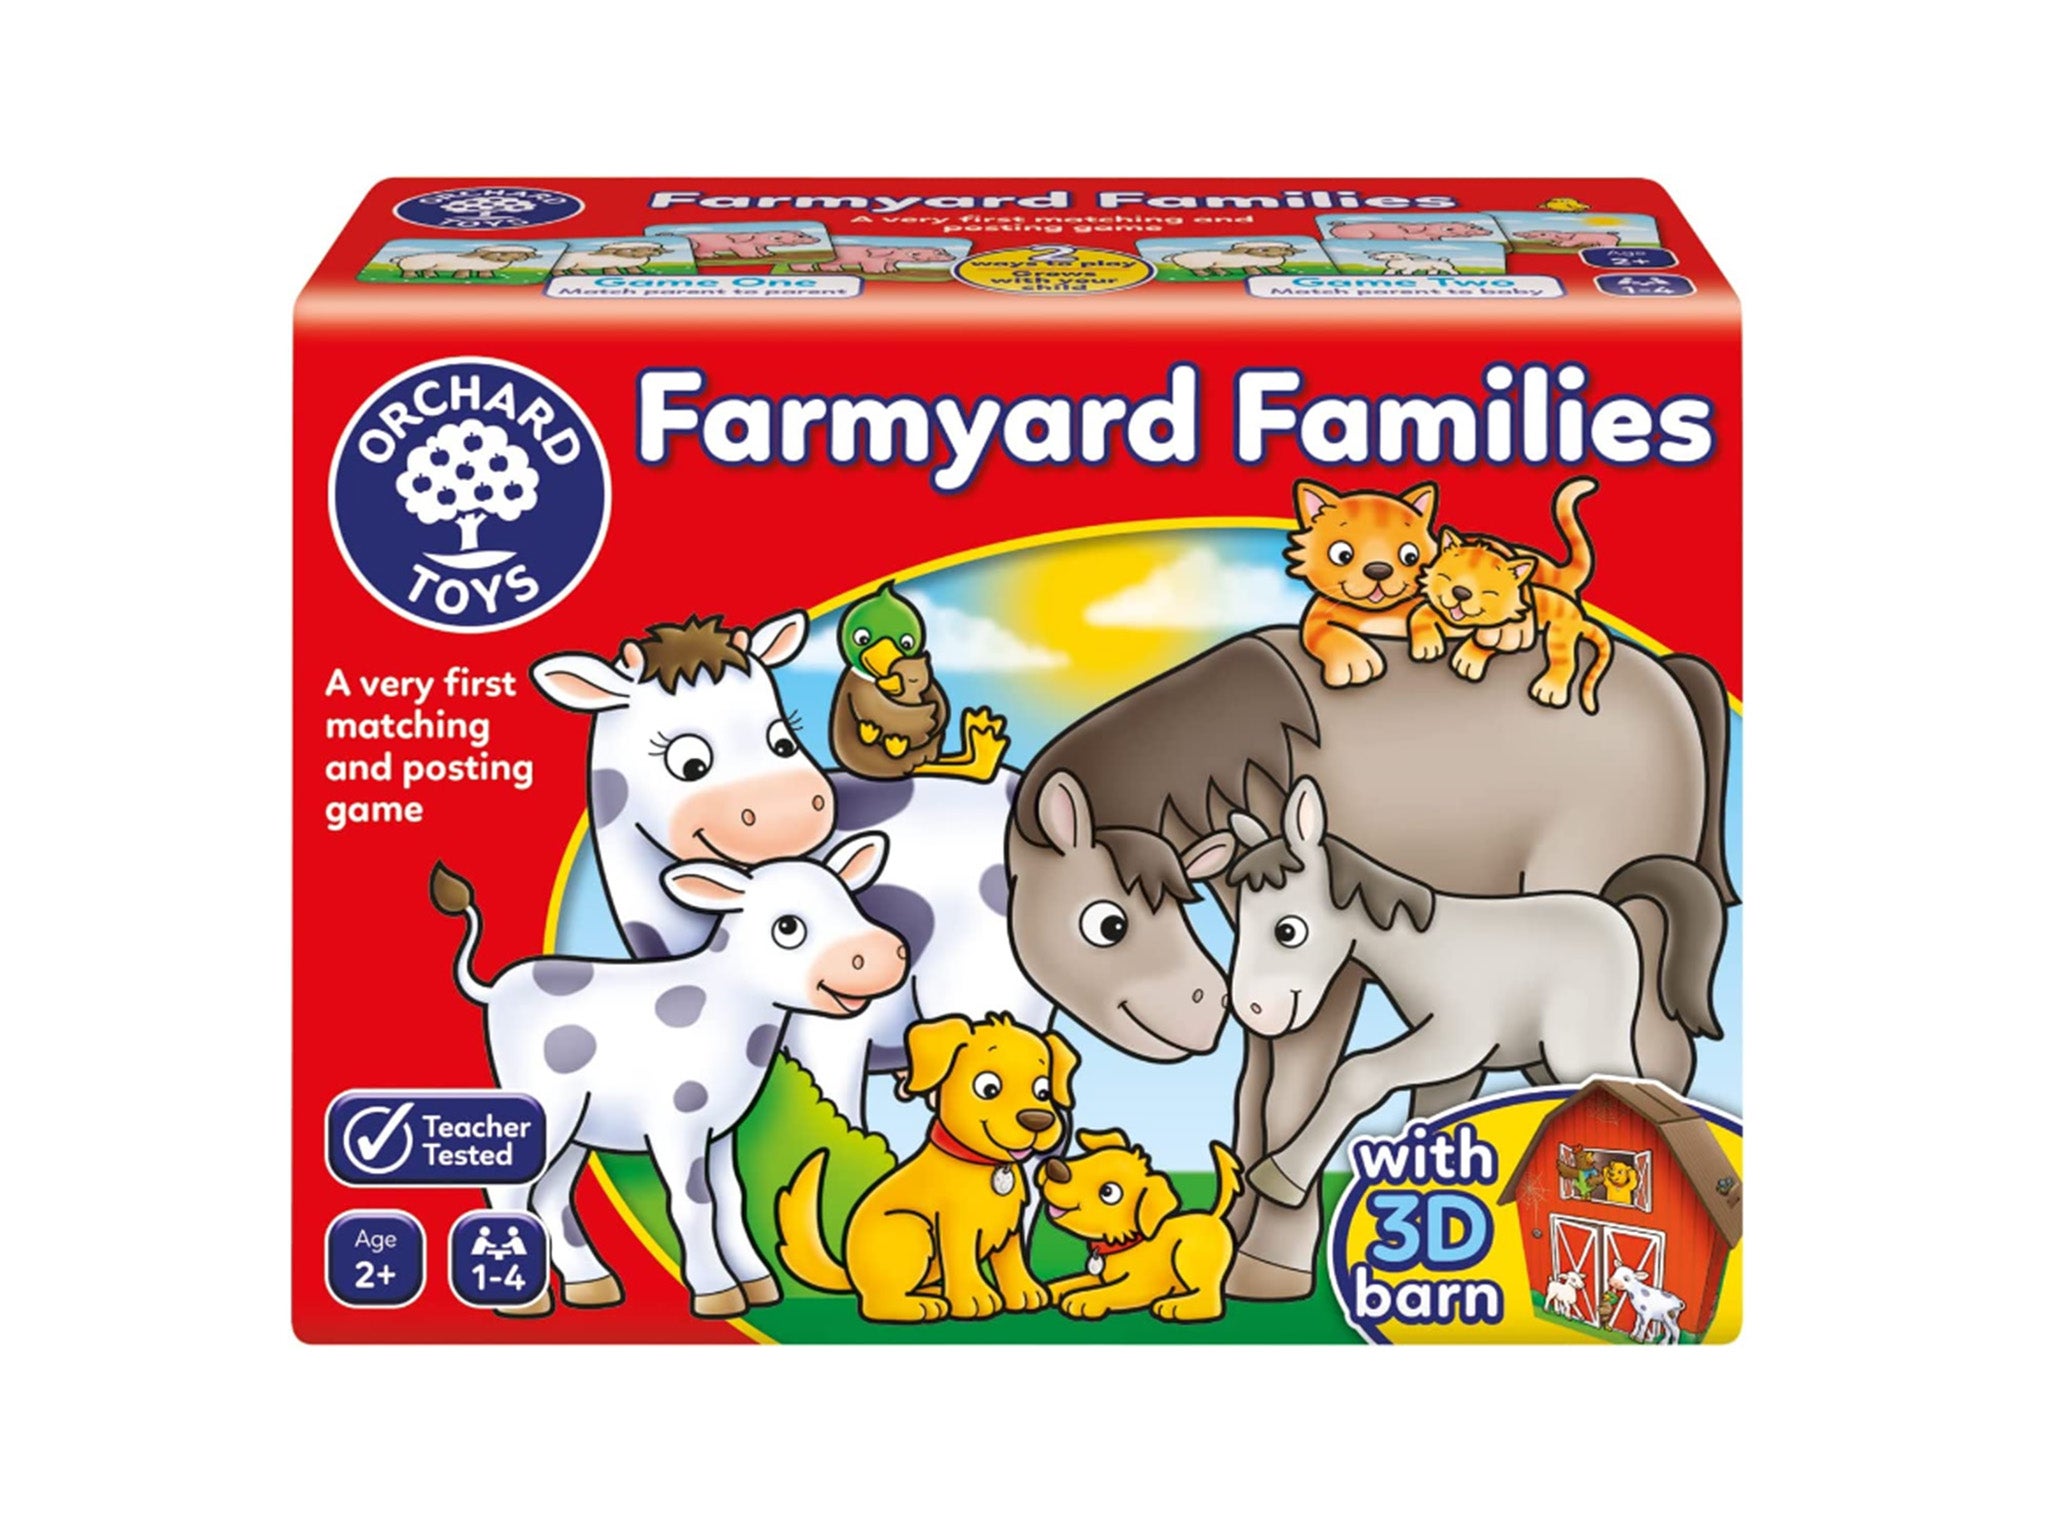 Orchard Toys farmyard families